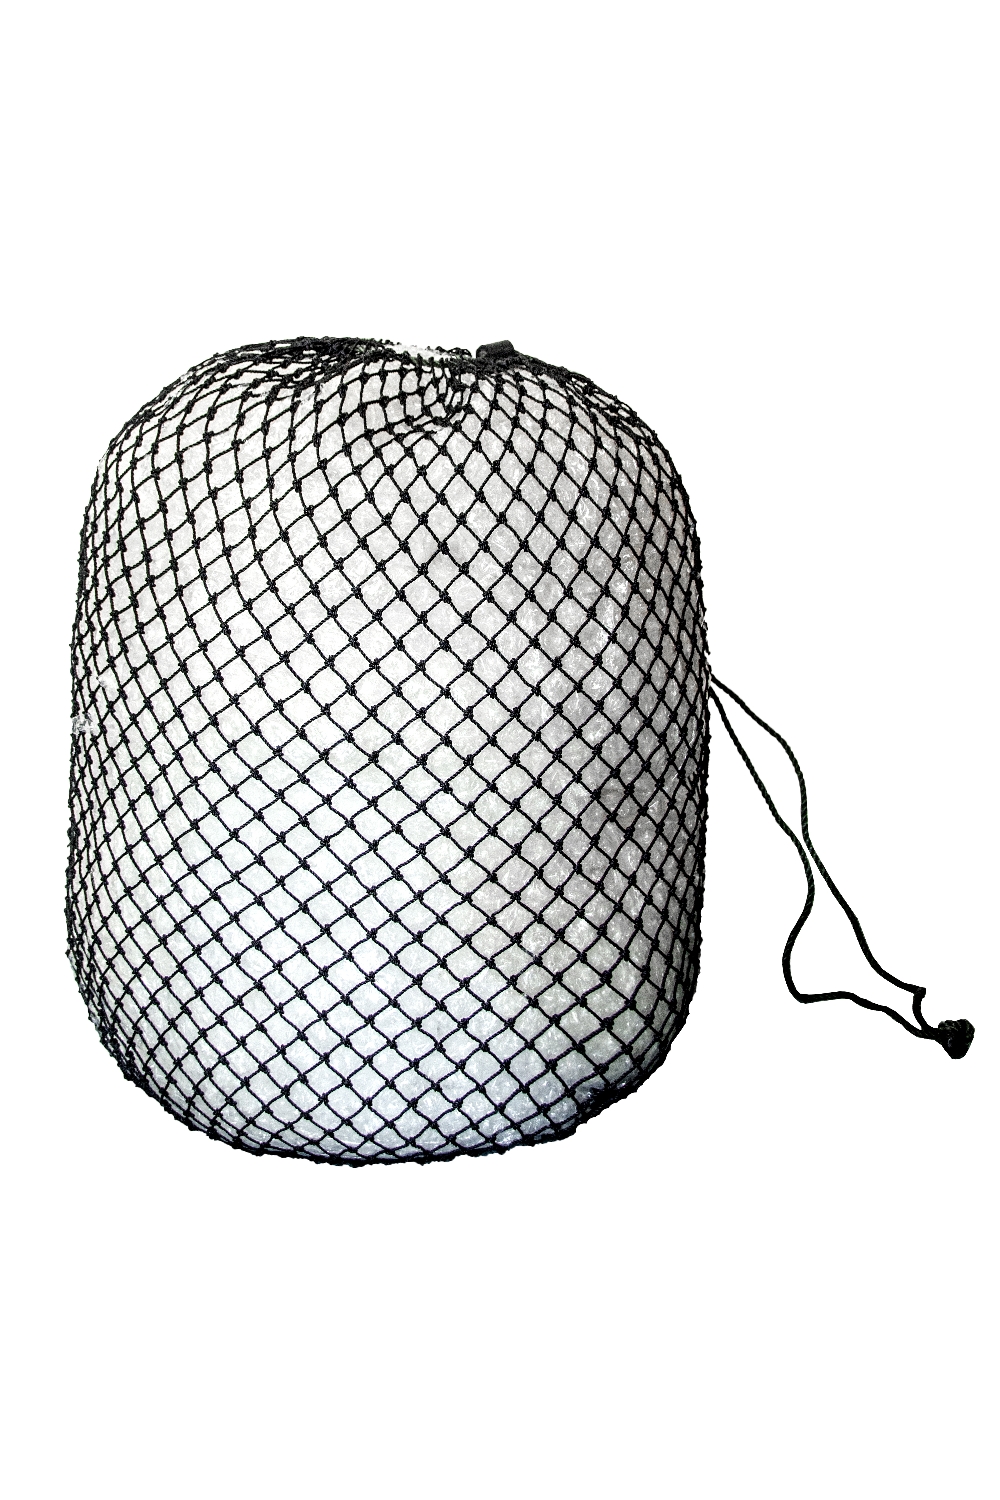 mesh-gear-bag-60cm-high-x-50cm-diam